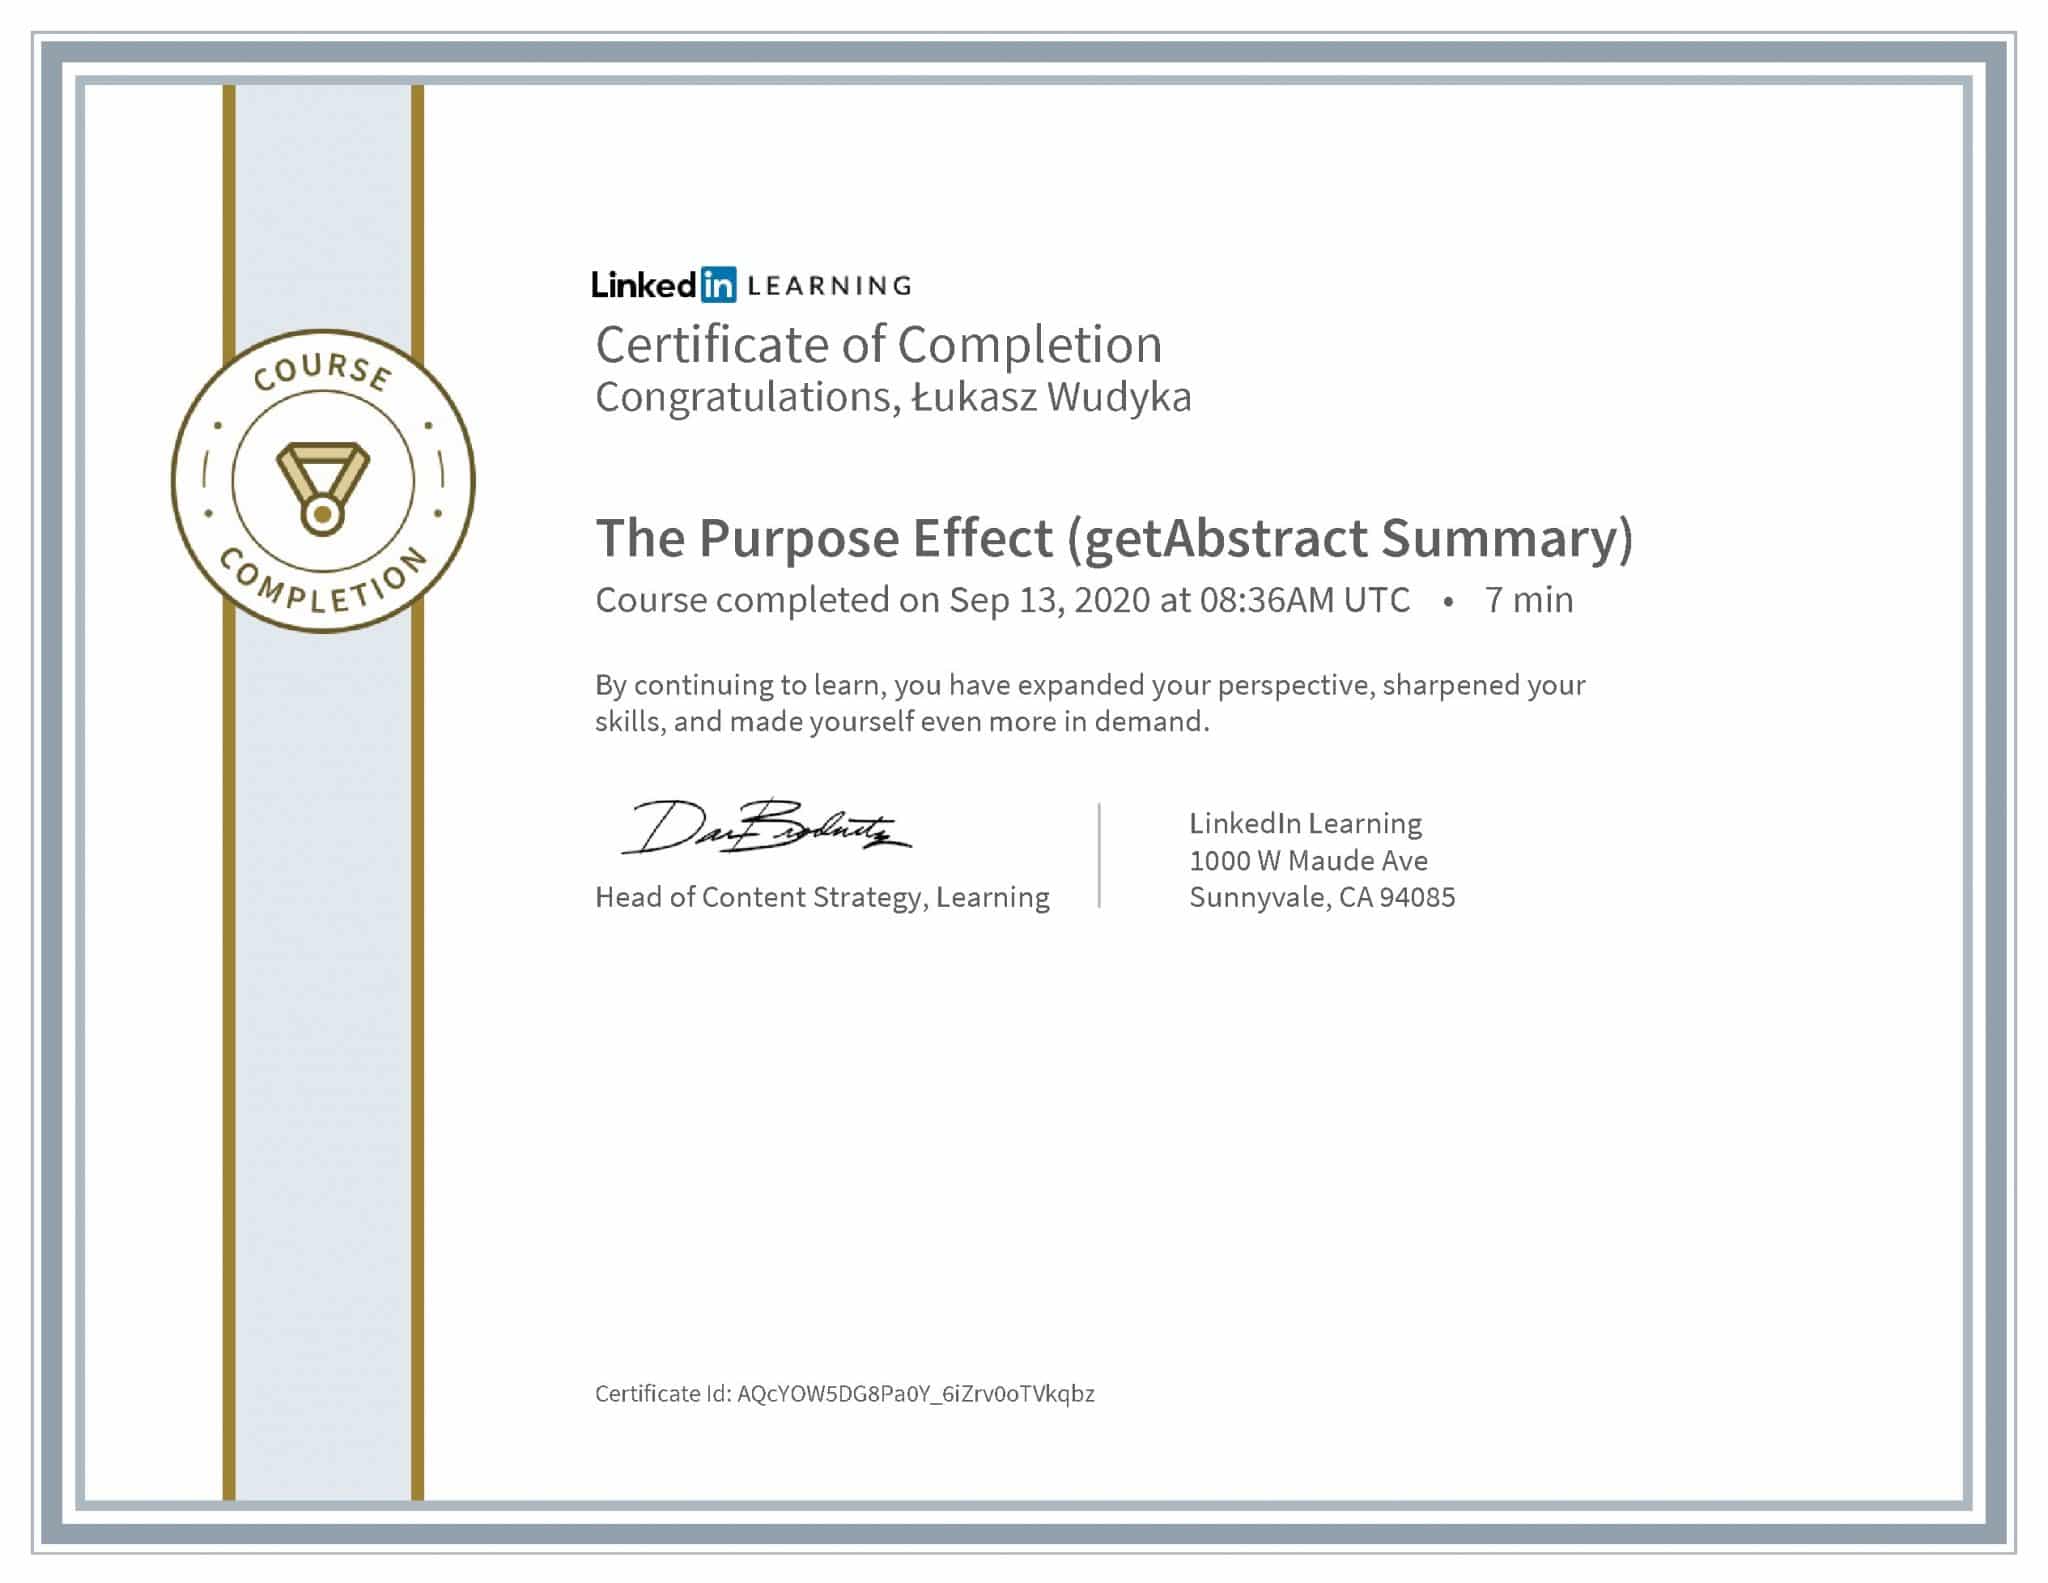 Łukasz Wudyka certyfikat LinkedIn The Purpose Effect (getAbstract Summary)